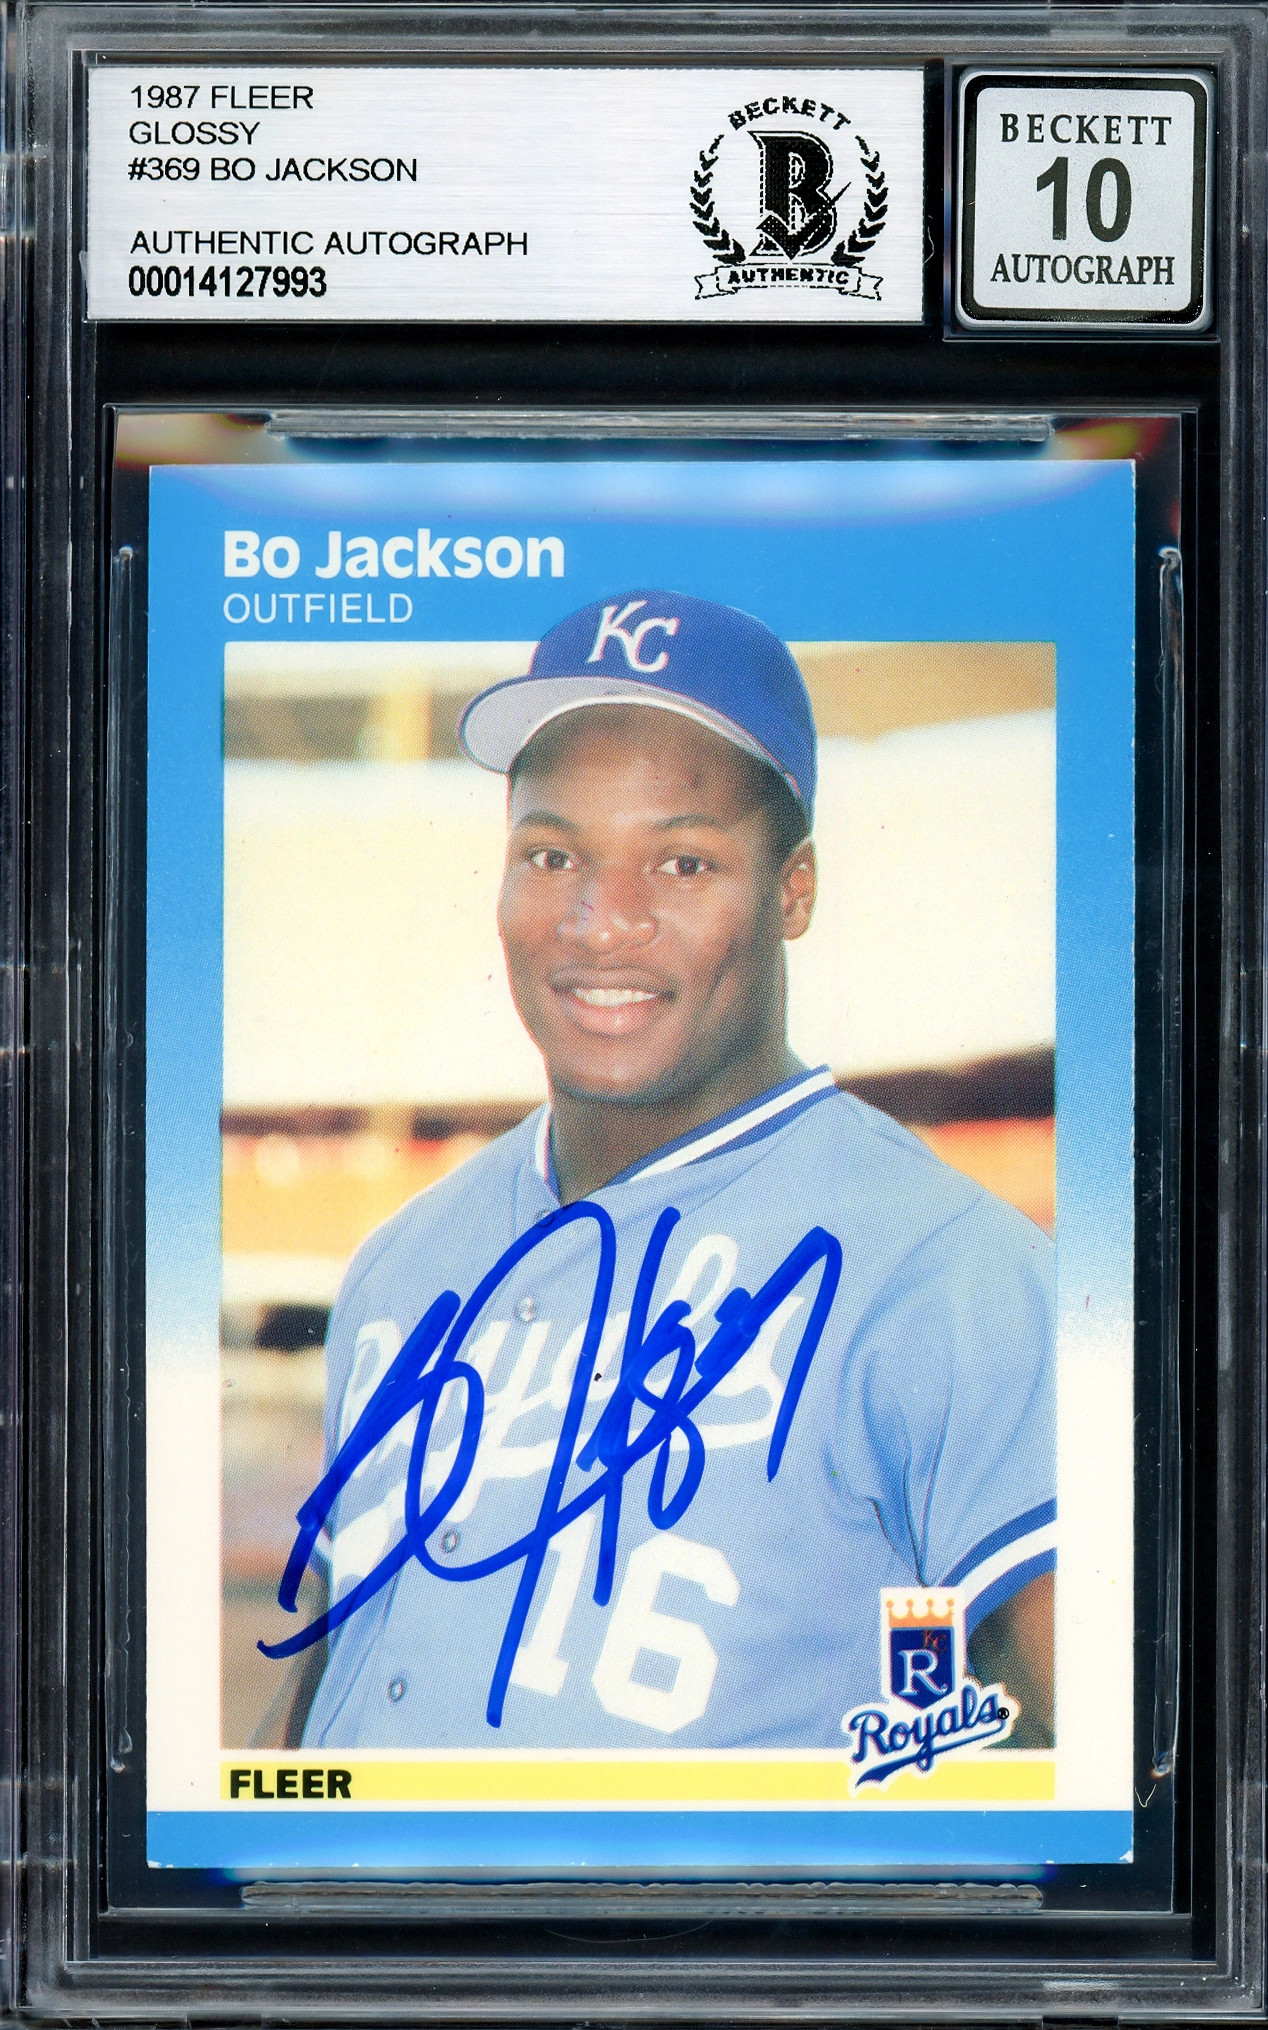 Bo Jackson Autographed 1987 Fleer Glossy Rookie Card #369 Kansas City Royals  Auto Grade Gem Mint 10 Beckett BAS